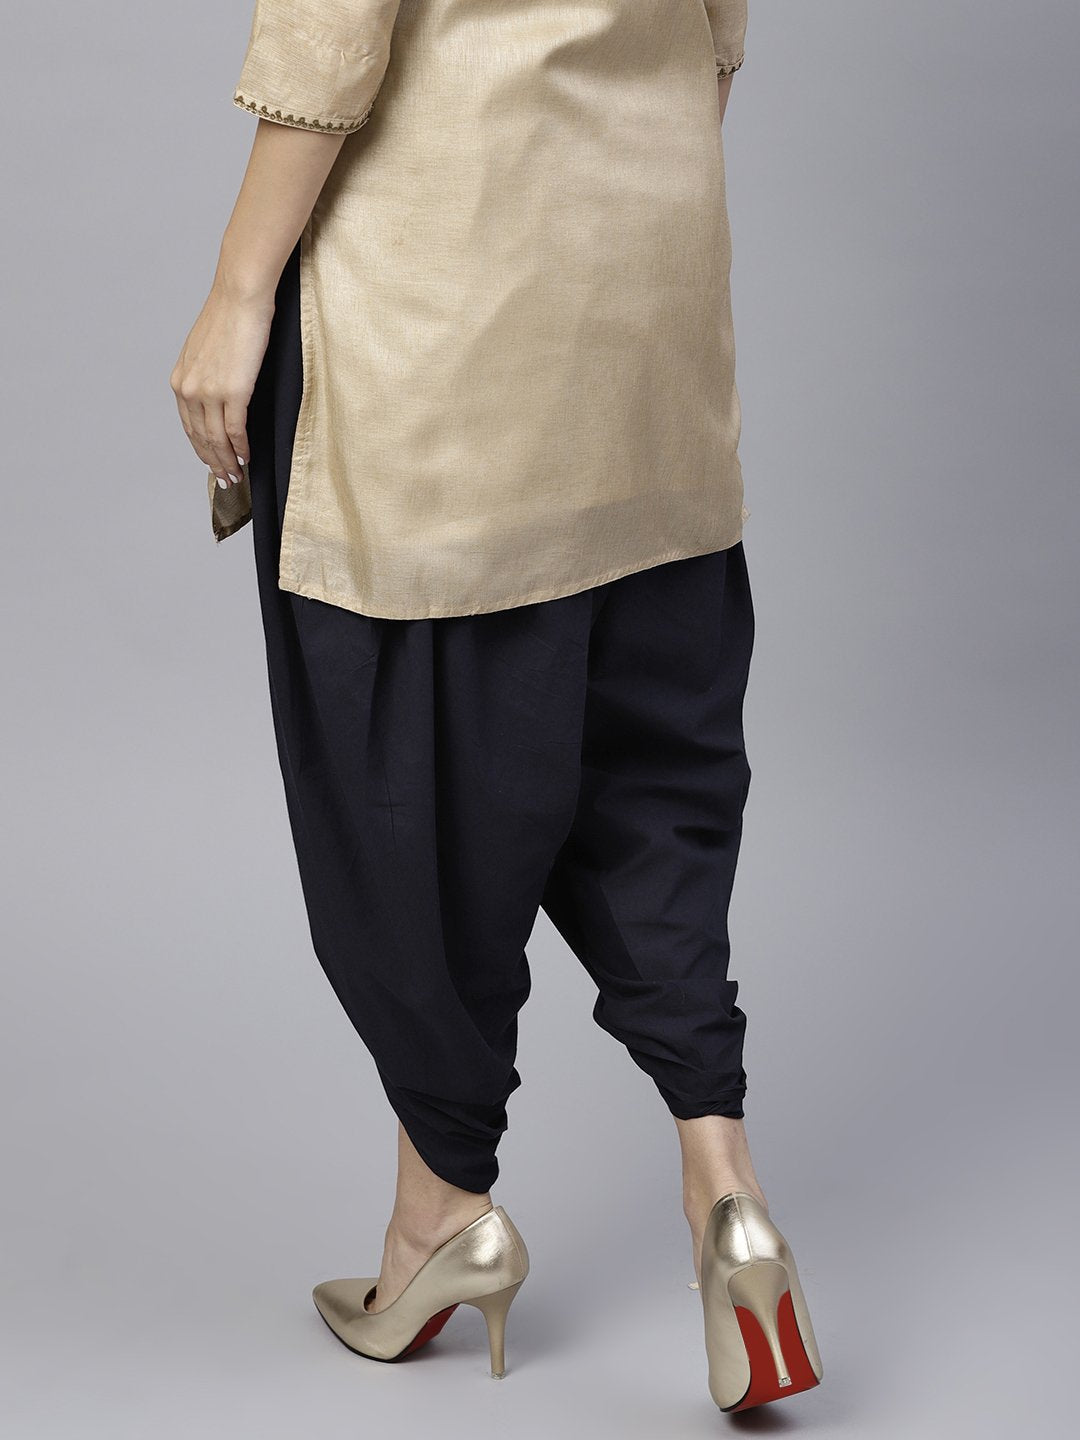 Cotton Dhoti Pants — Haritah Colour, Hand Stitched Border | AdiValka